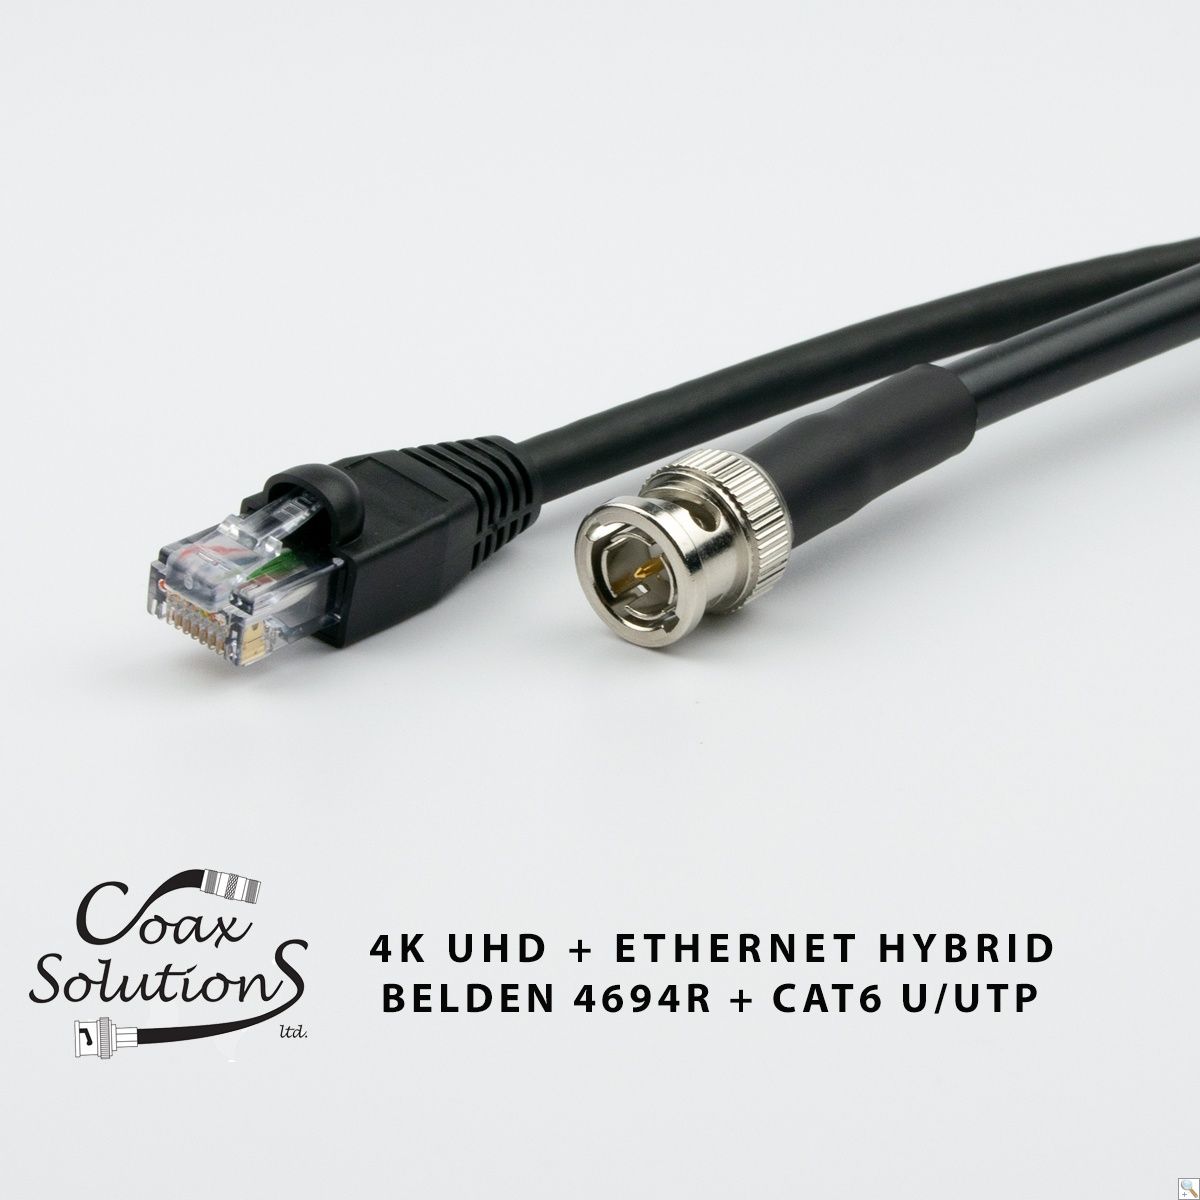 Belden 4694R + CAT6 Hybrid 4K UHD Patch Cable